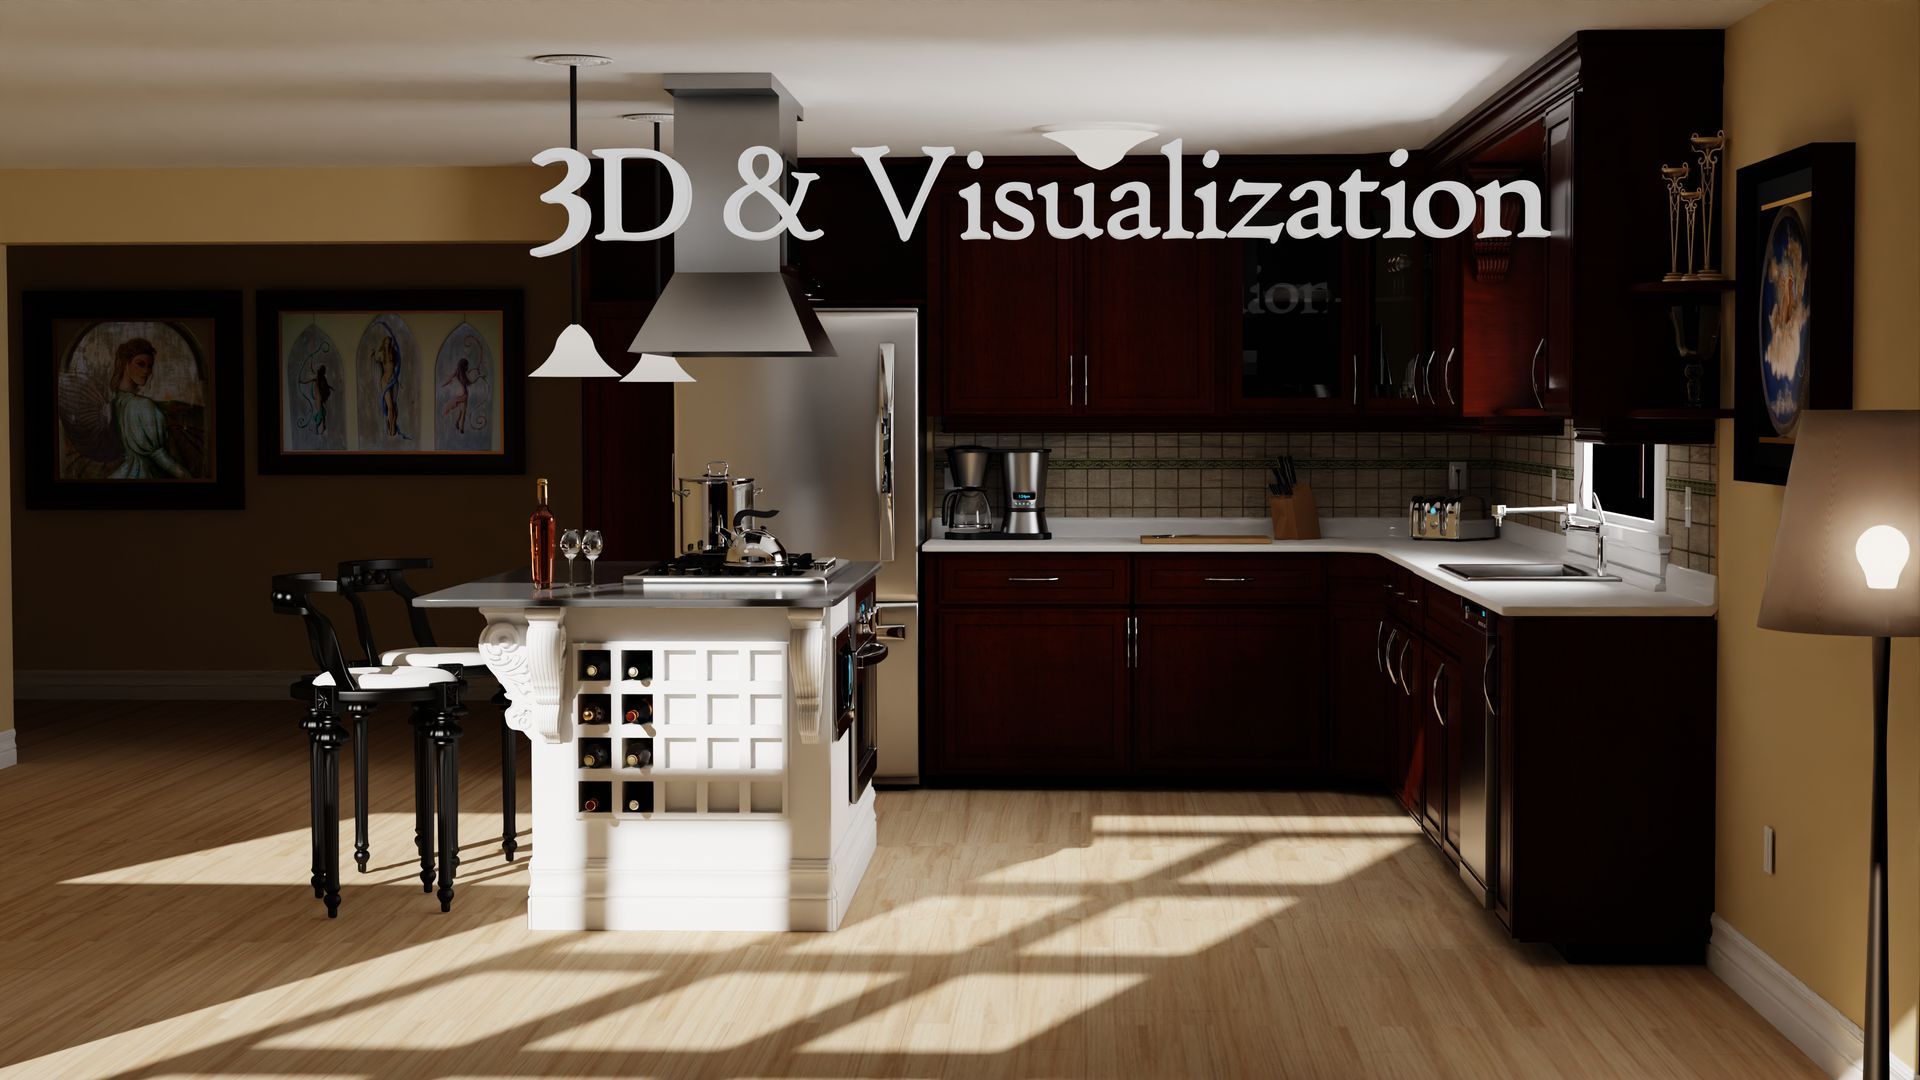 3D / VISUALIZATION